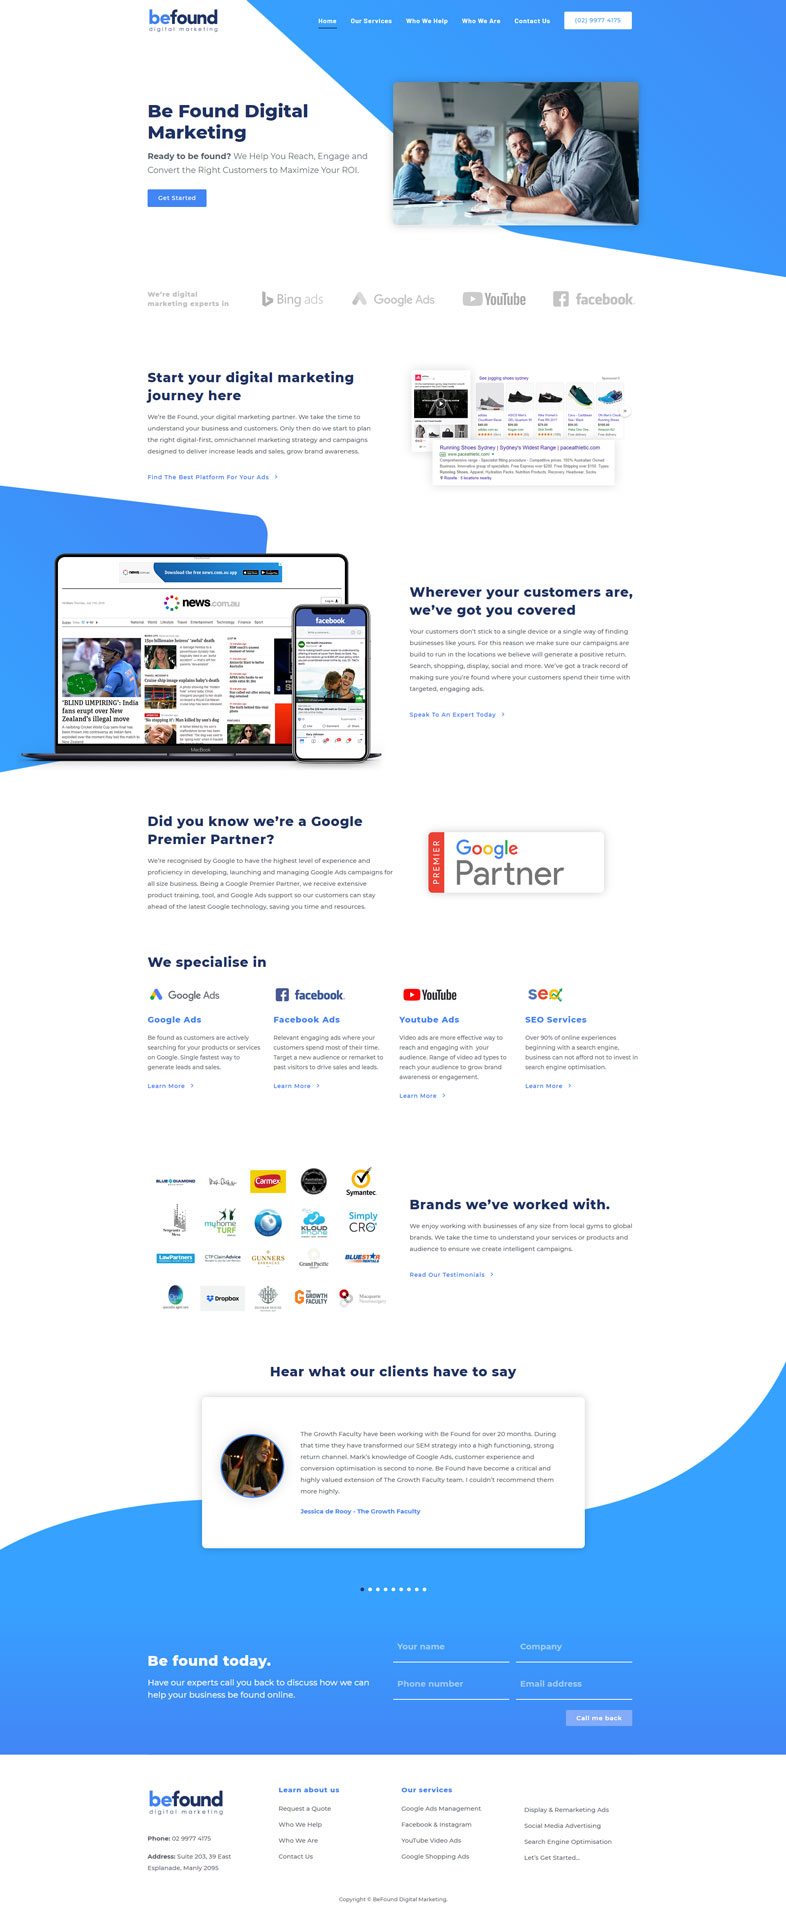 BeFound Digital's website design of the homepage